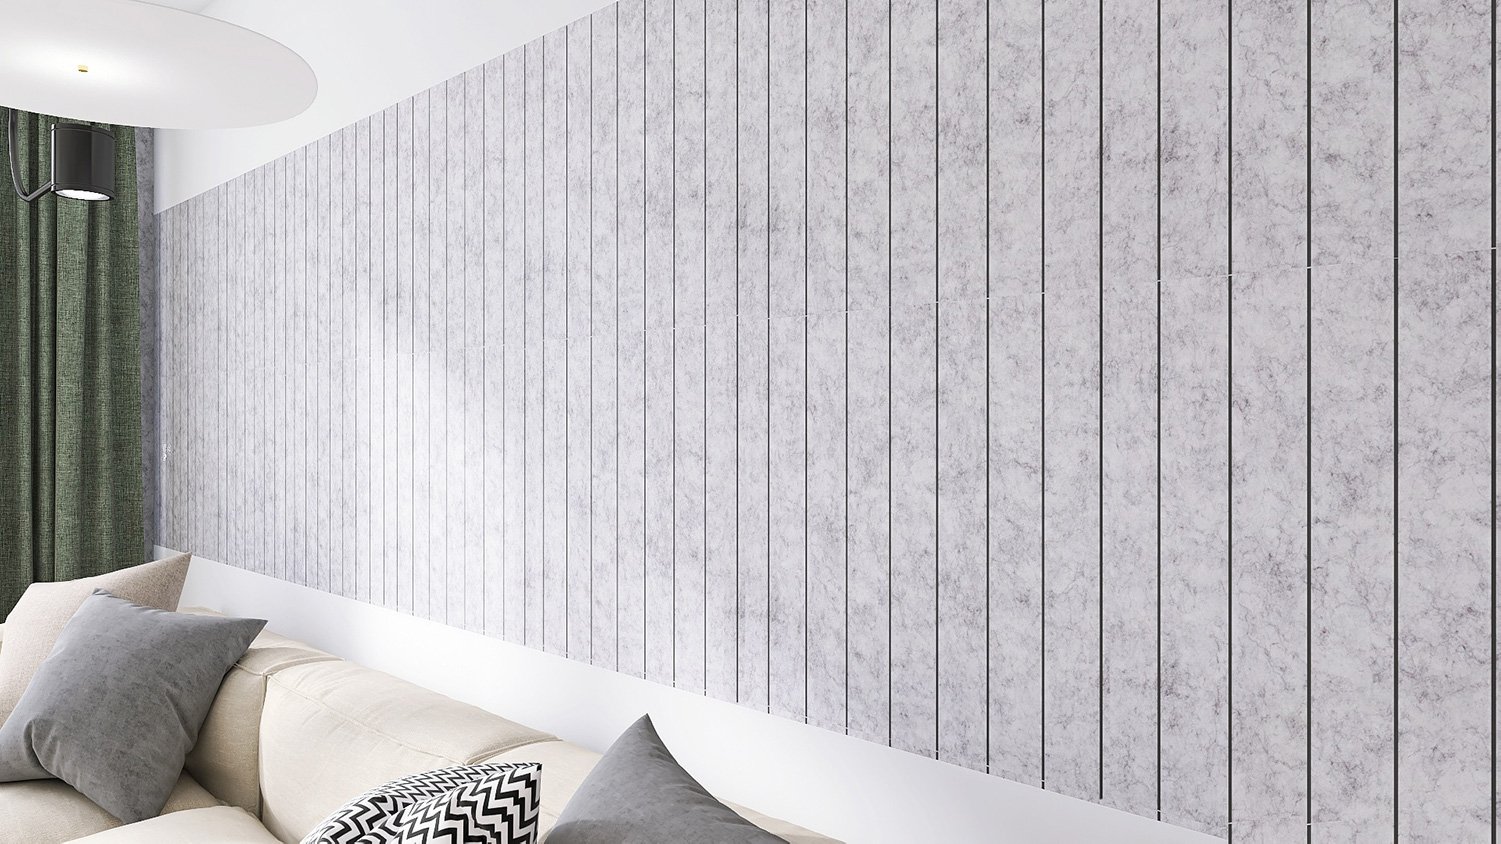 Wallpaper improves acoustic comfort